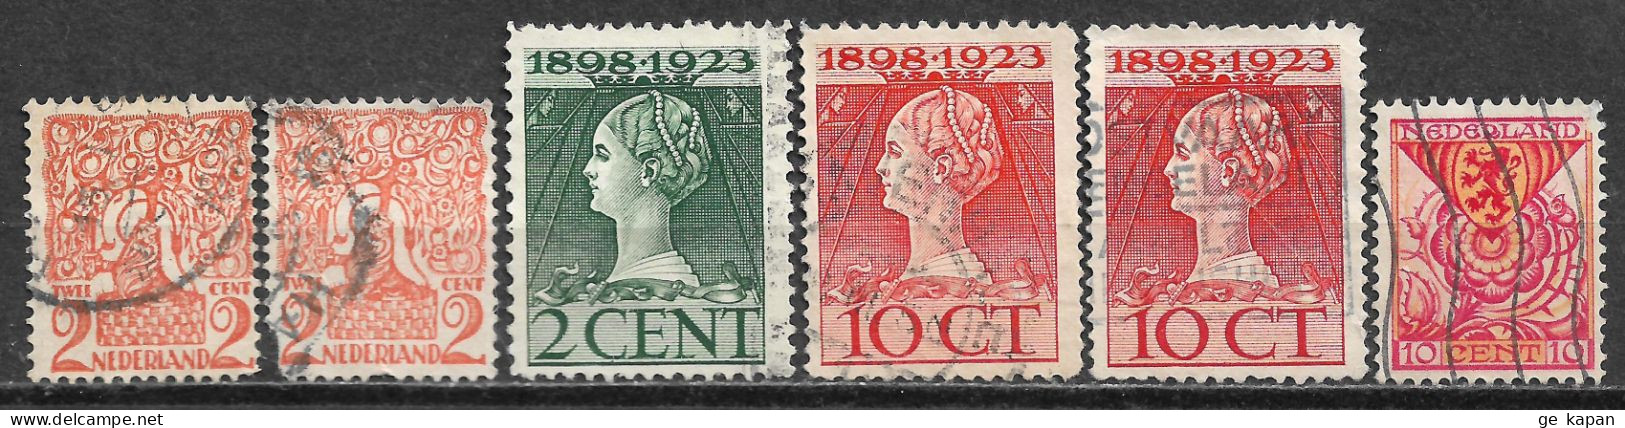 1923-1925 NETHERLANDS SET OF 6 USED STAMPS (Scott # 114,124,127,B11) CV $1.55 - Used Stamps